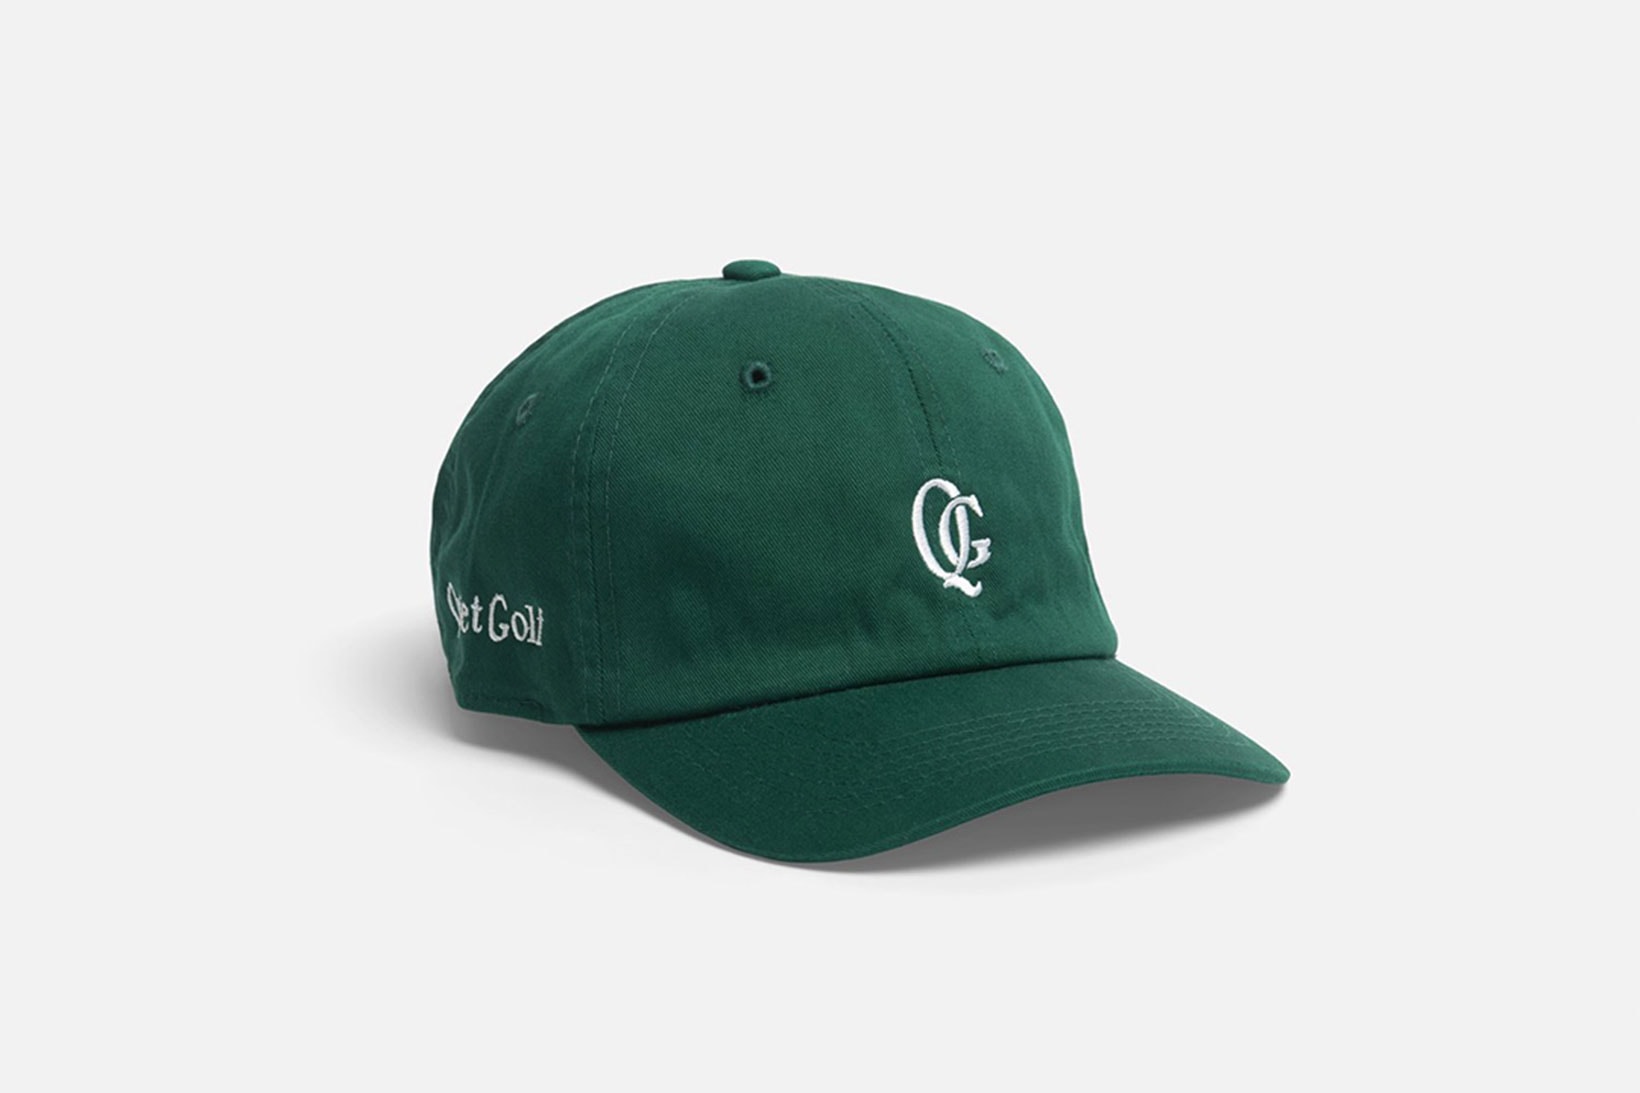 Quiet Golf Logo Cap Hat Green